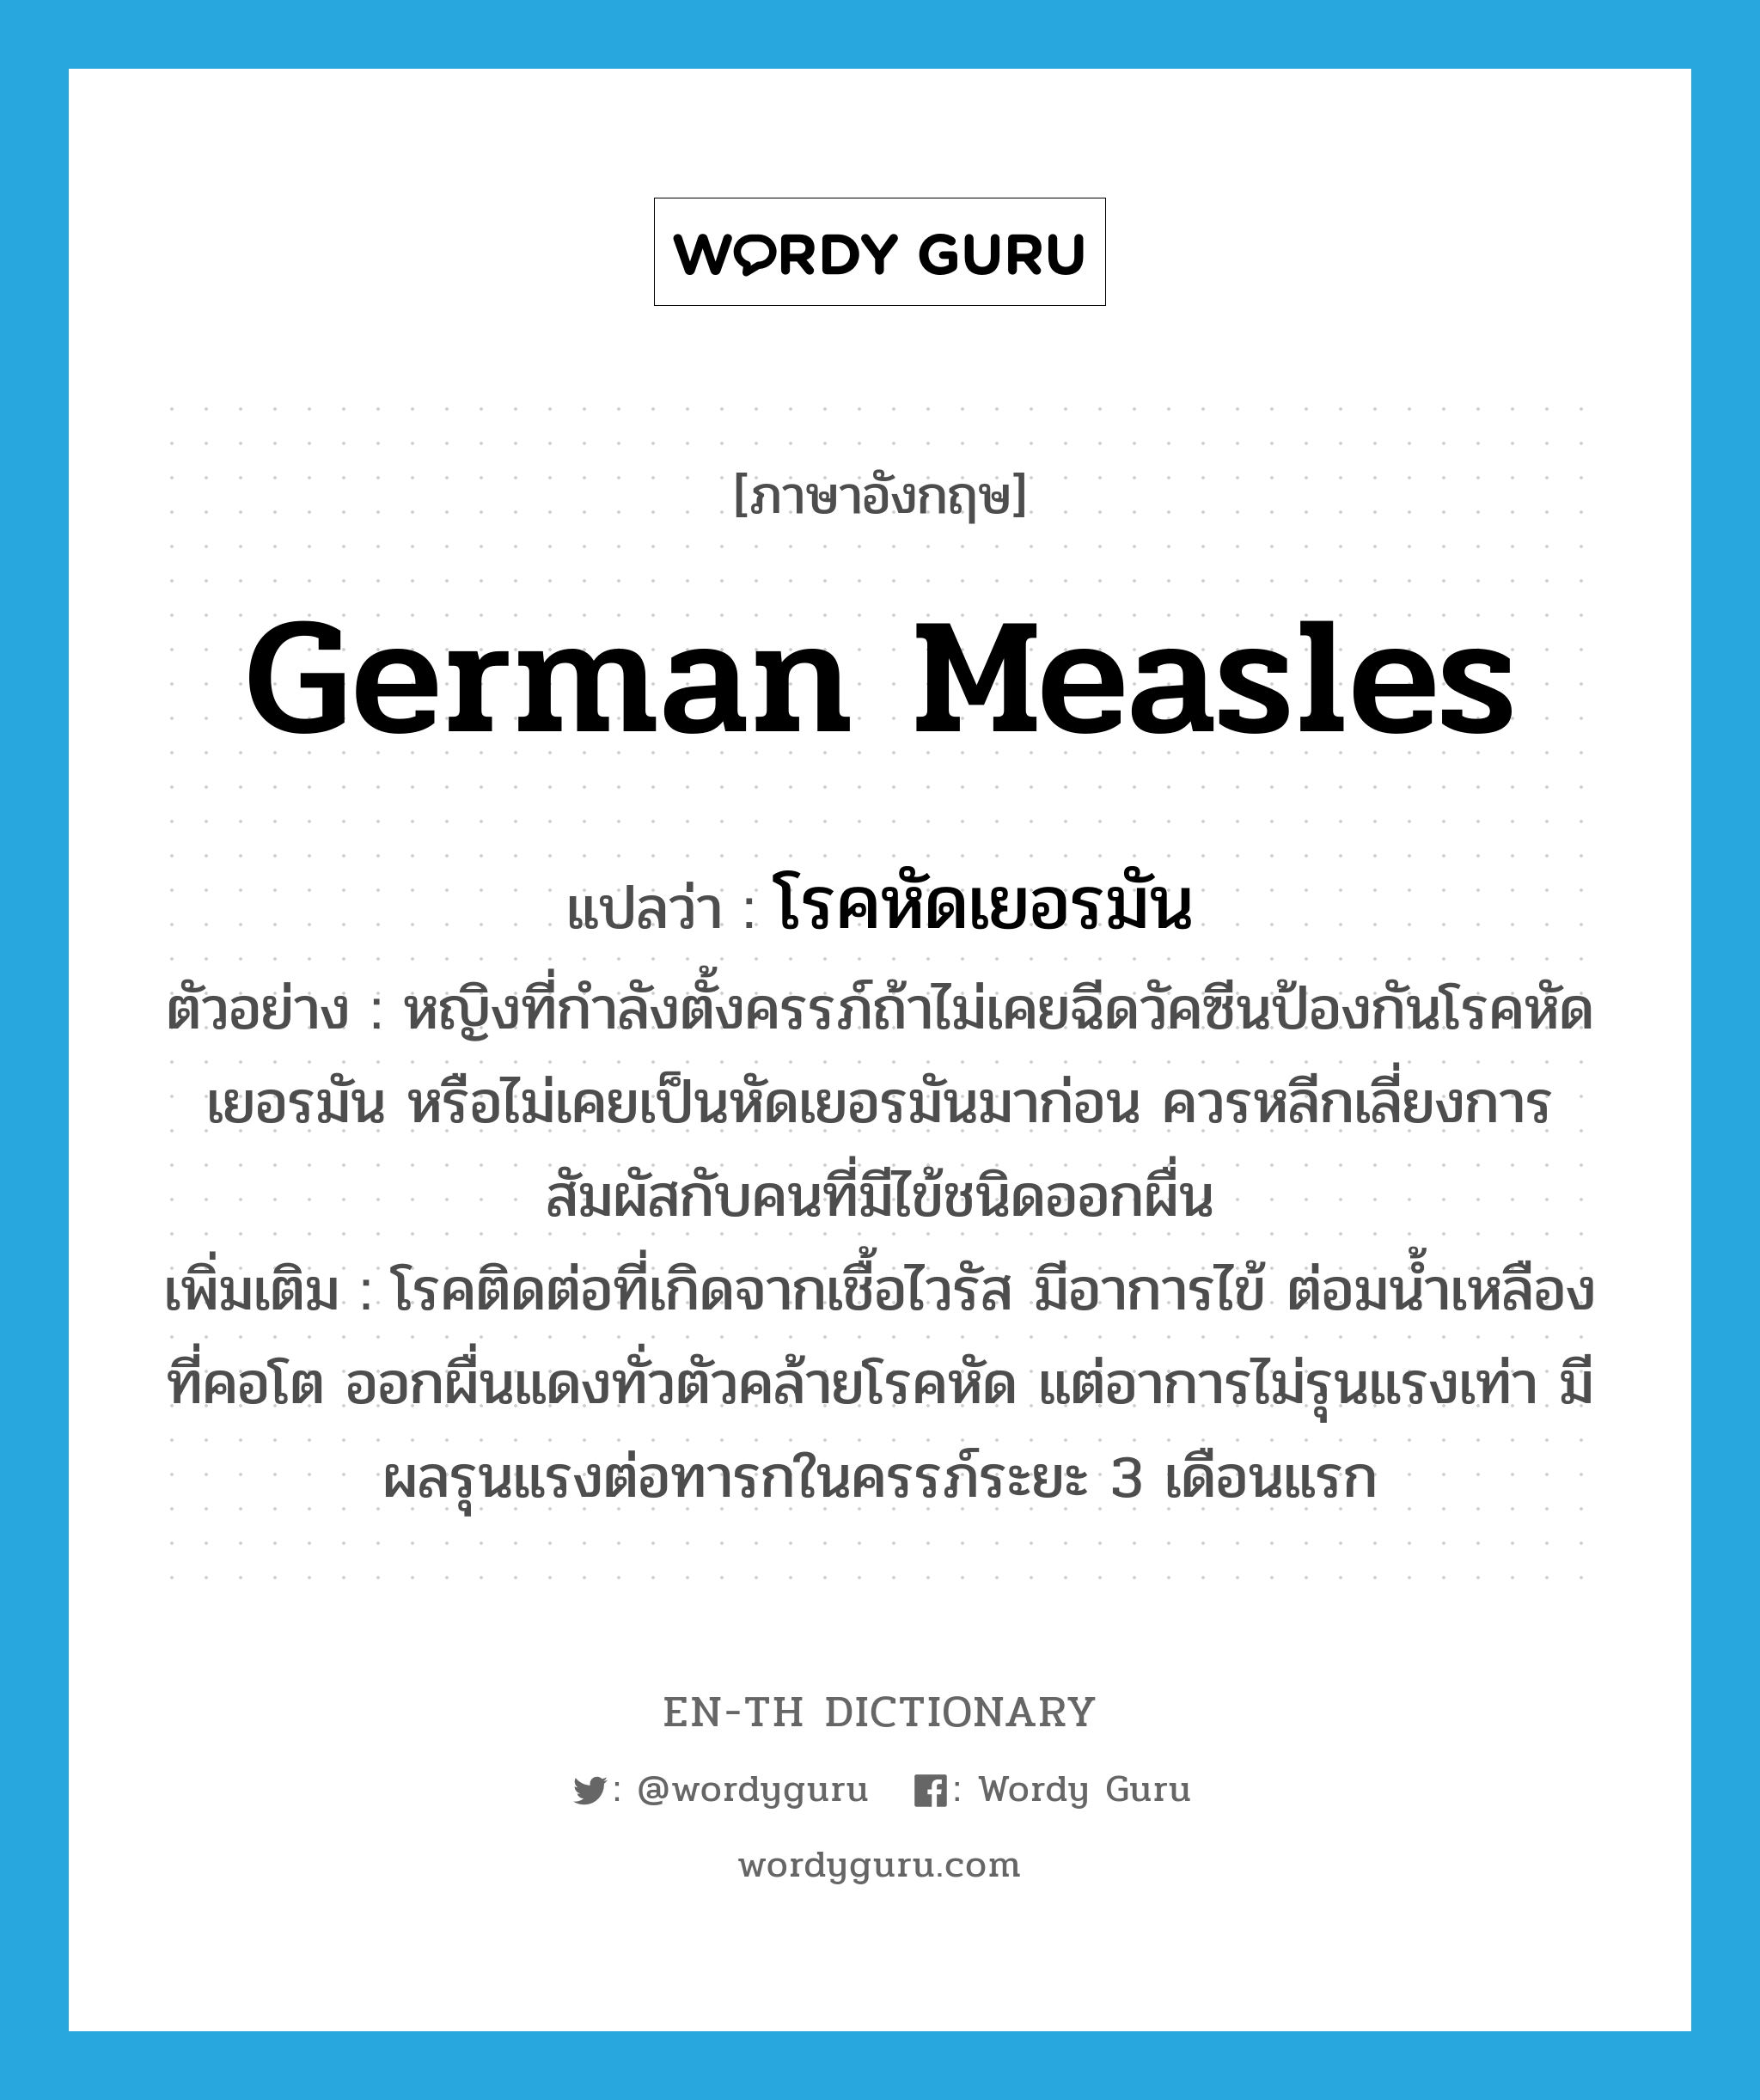 German measles แปลว่า?, คำศัพท์ภาษาอังกฤษ German measles แปลว่า โรคหัดเยอรมัน ประเภท N ตัวอย่าง หญิงที่กำลังตั้งครรภ์ถ้าไม่เคยฉีดวัคซีนป้องกันโรคหัดเยอรมัน หรือไม่เคยเป็นหัดเยอรมันมาก่อน ควรหลีกเลี่ยงการสัมผัสกับคนที่มีไข้ชนิดออกผื่น เพิ่มเติม โรคติดต่อที่เกิดจากเชื้อไวรัส มีอาการไข้ ต่อมน้ำเหลืองที่คอโต ออกผื่นแดงทั่วตัวคล้ายโรคหัด แต่อาการไม่รุนแรงเท่า มีผลรุนแรงต่อทารกในครรภ์ระยะ 3 เดือนแรก หมวด N